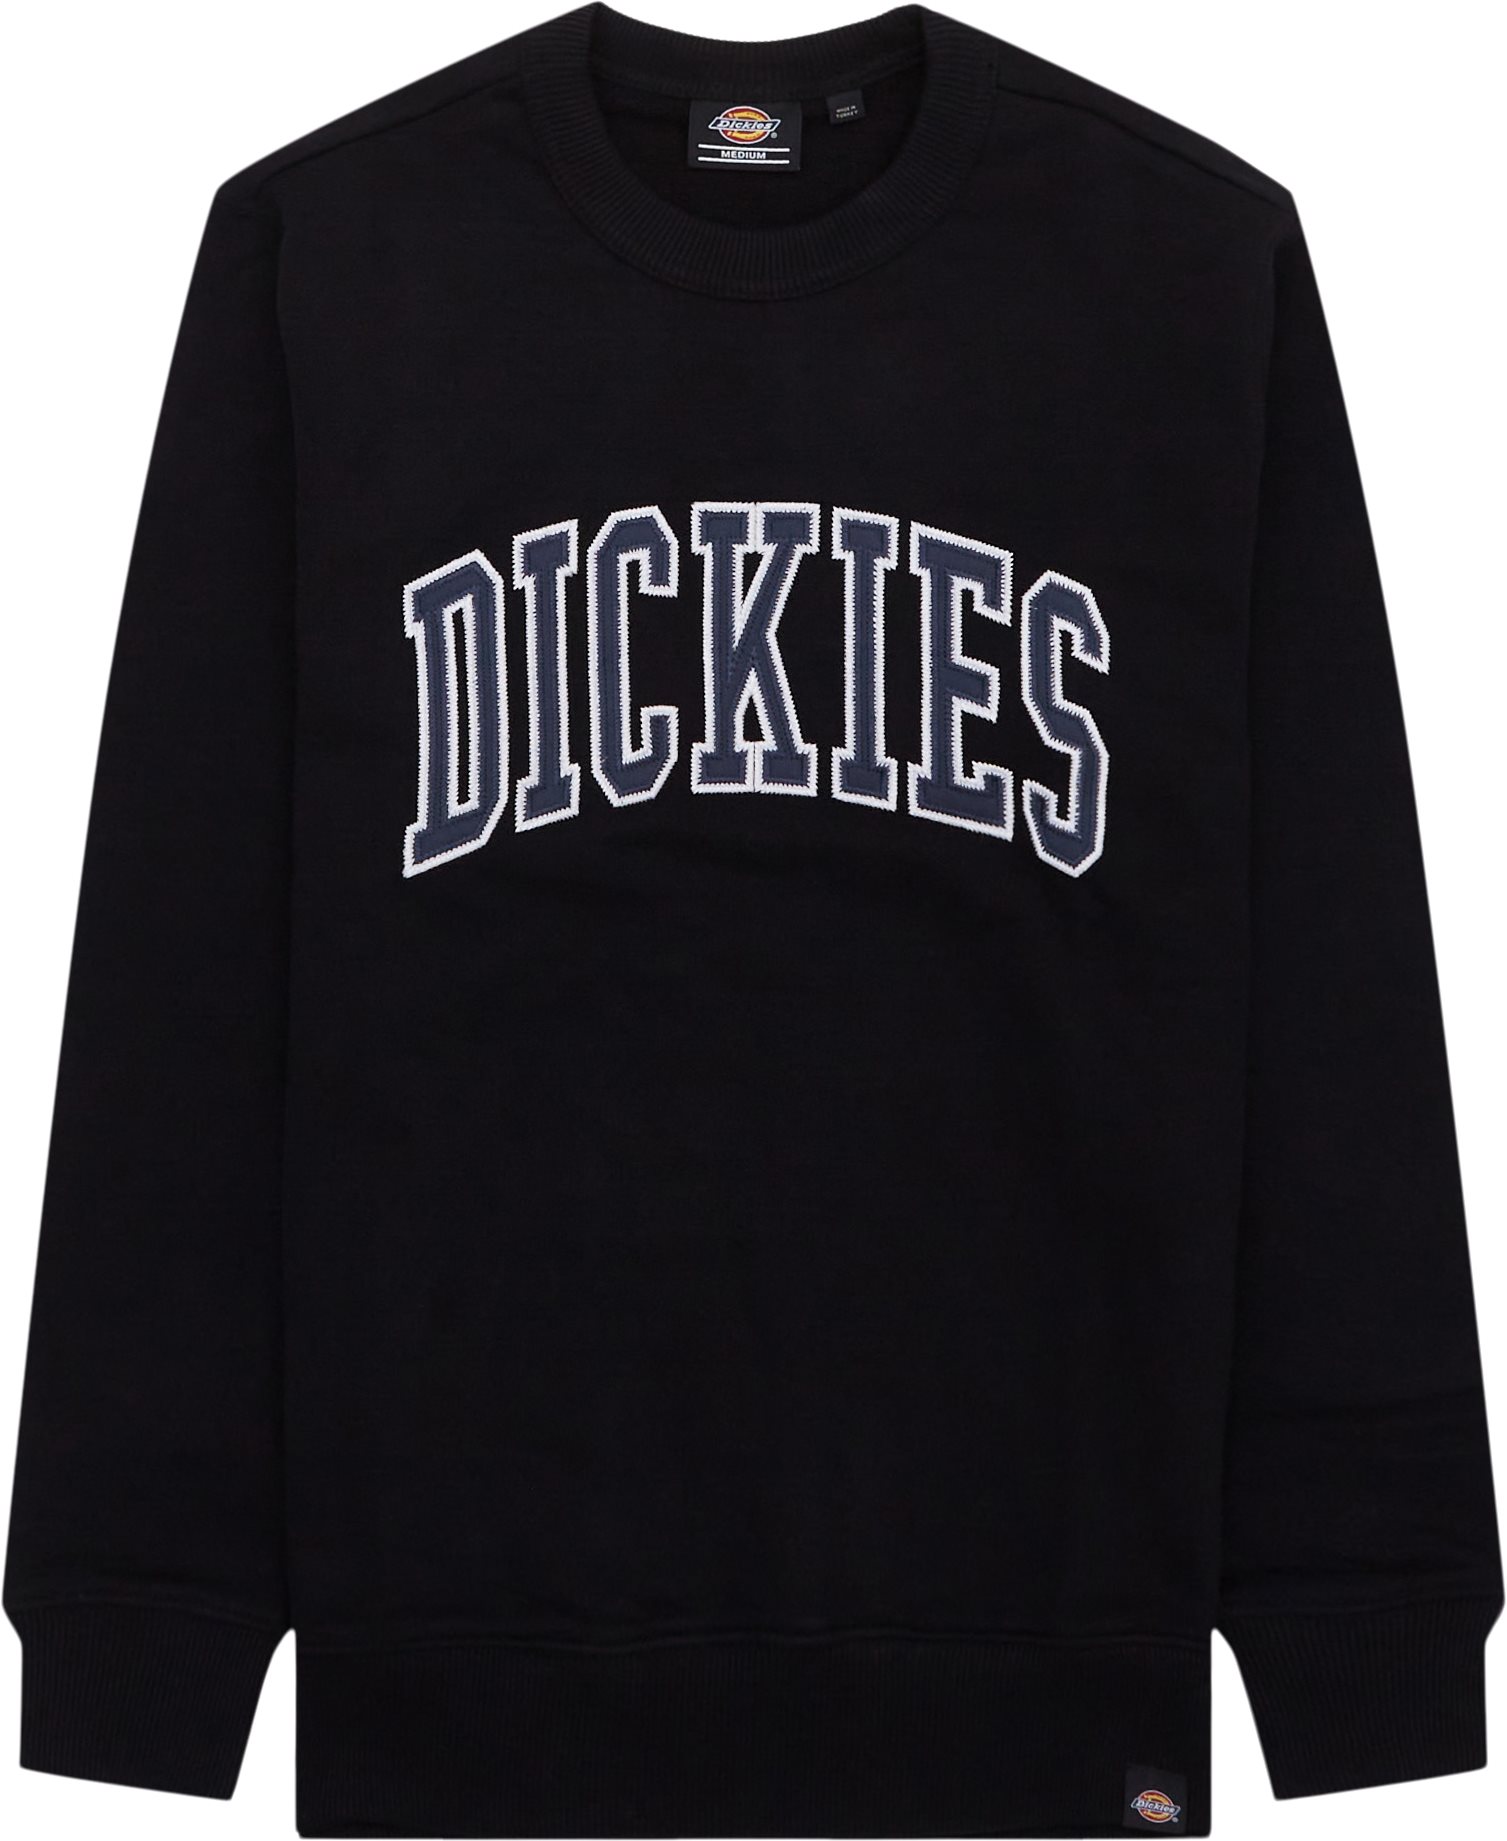 Dickies Sweatshirts ATKIN SWEAT Sort